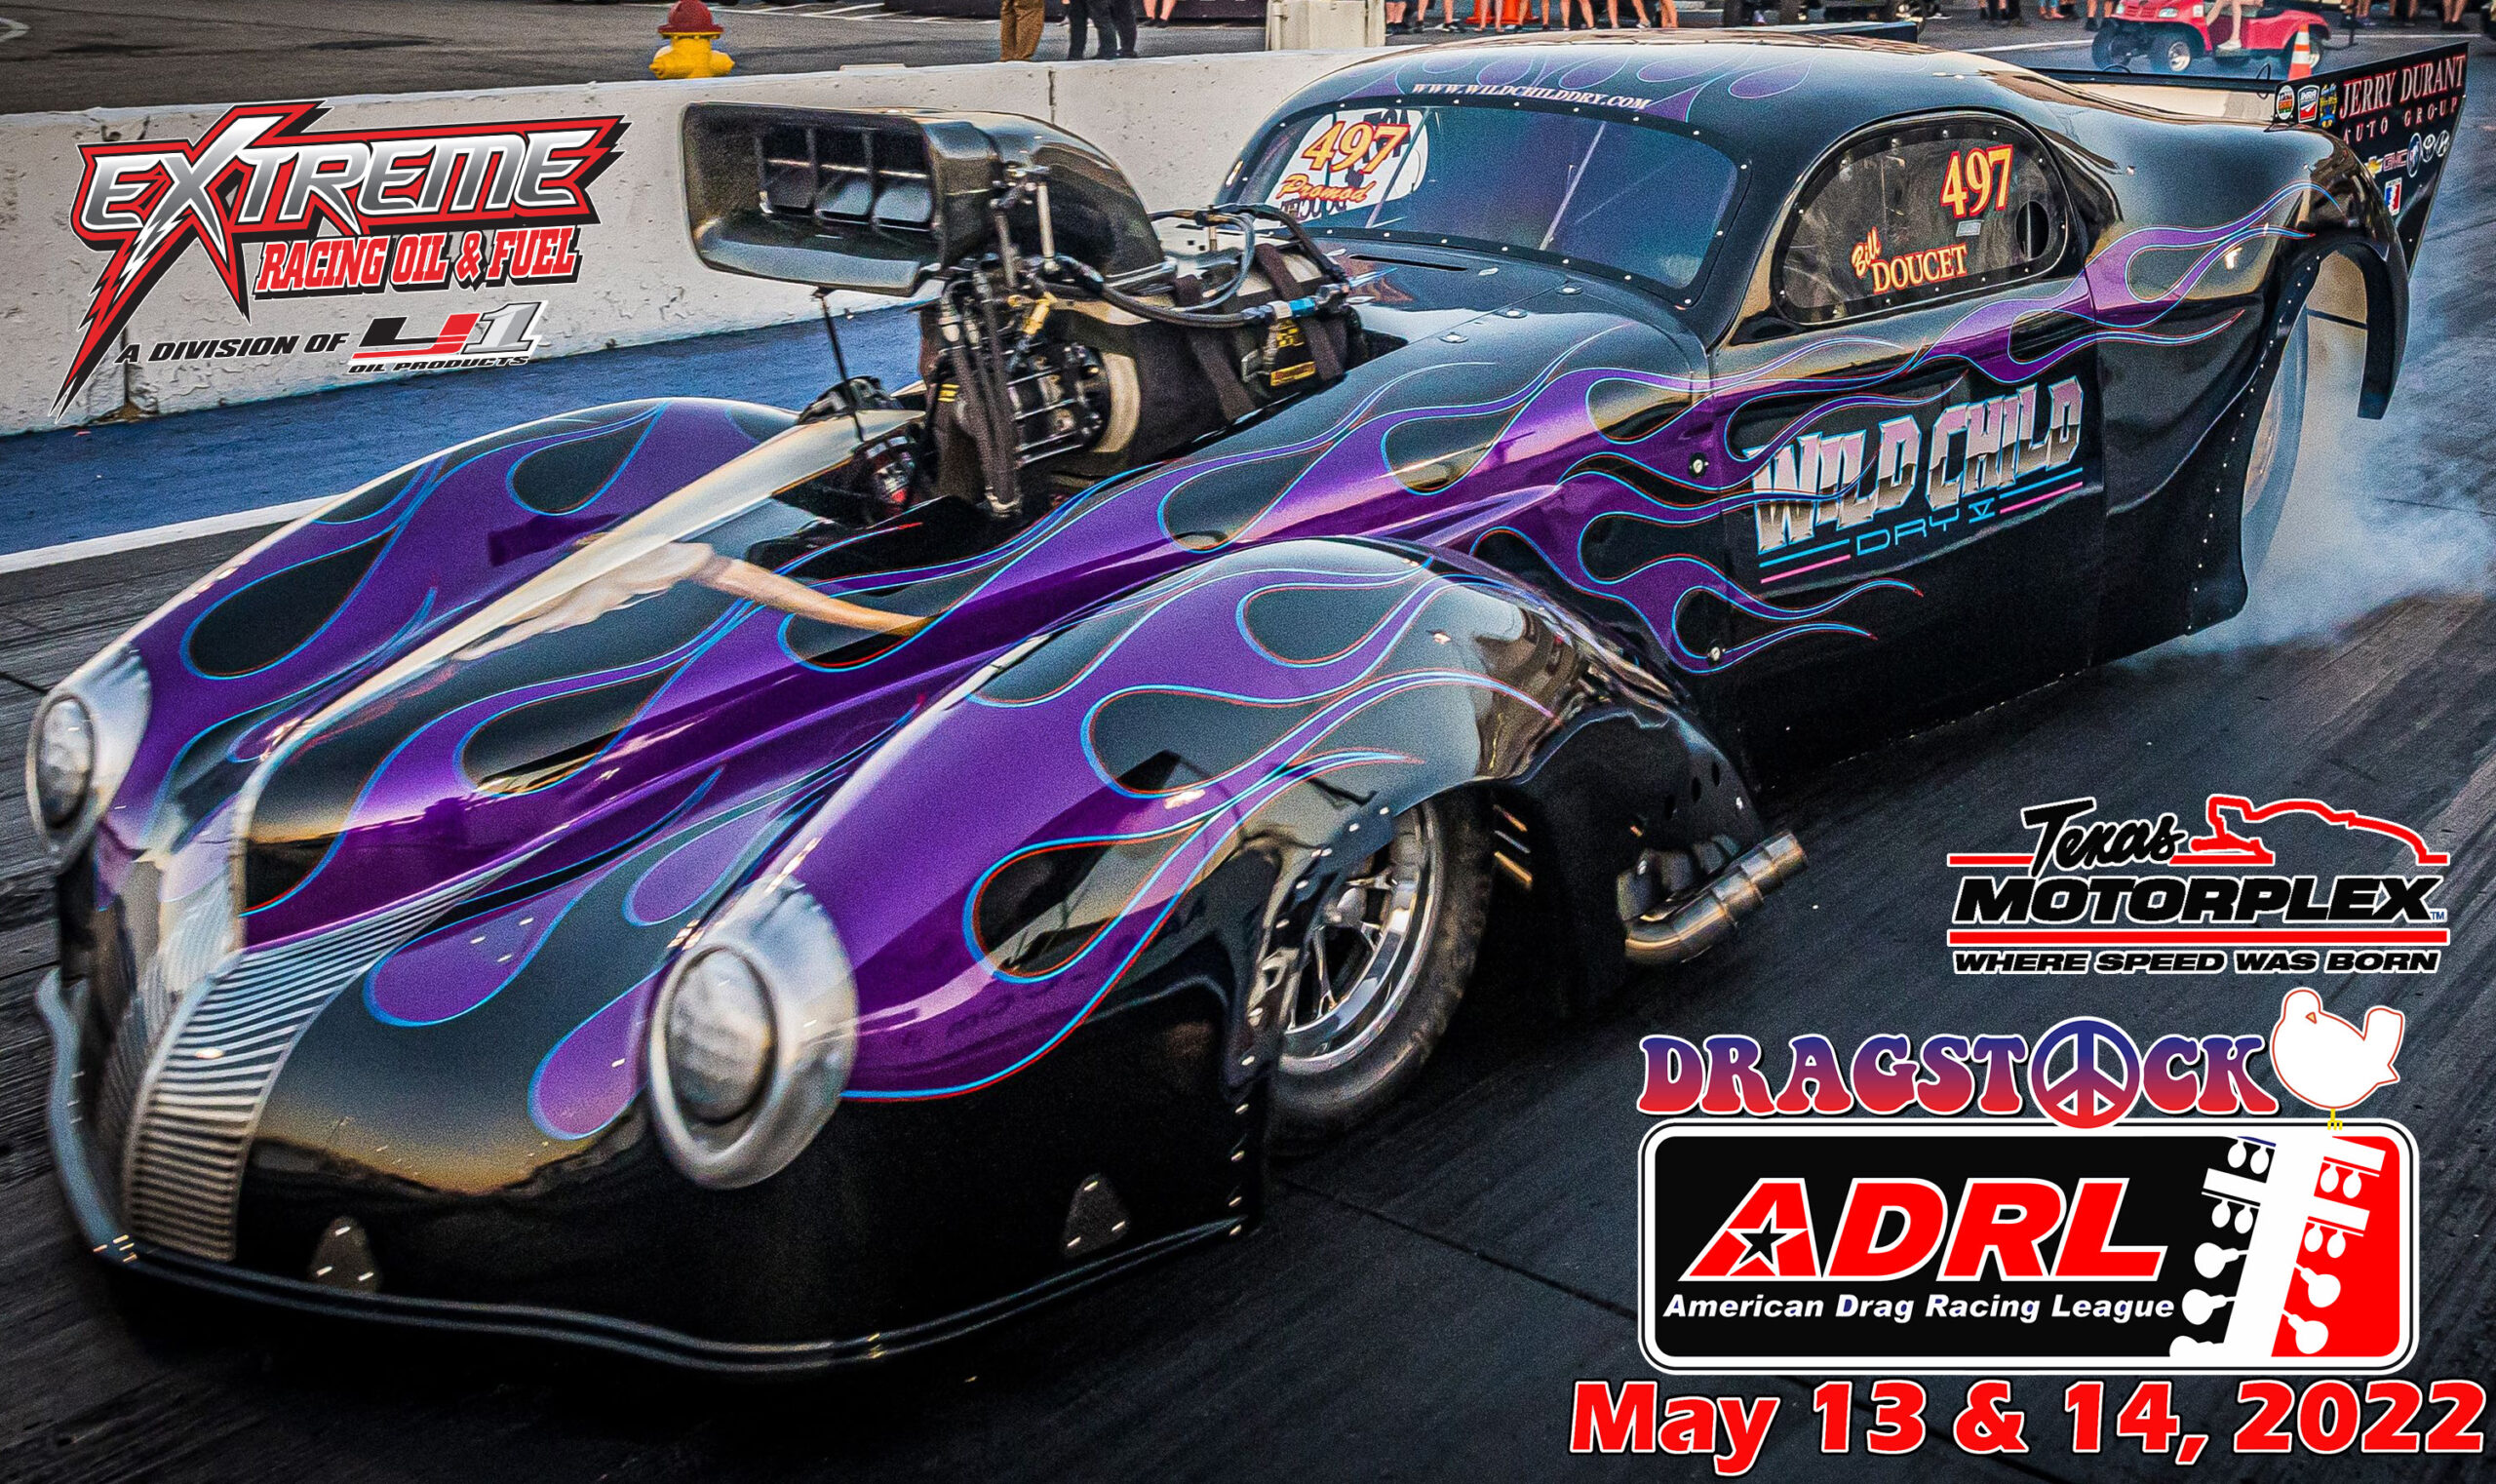 ’22 ADRL Tour Kicks Off May 13-14 at Texas Motorplex With Dragstock